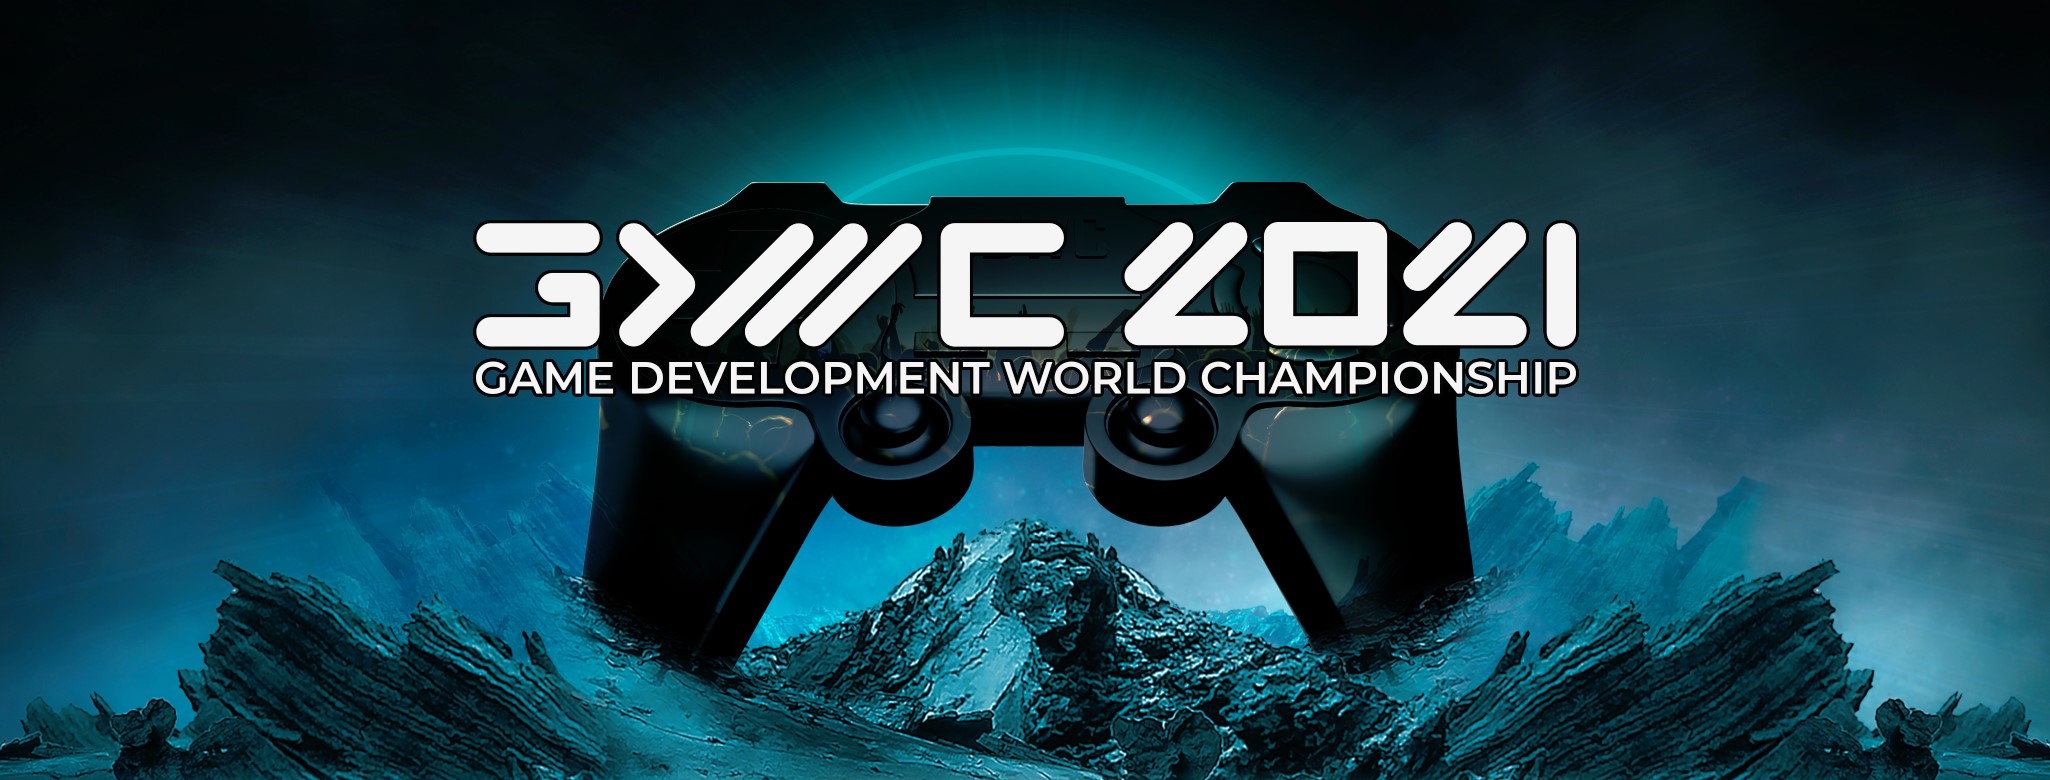 Game Development World Championship 2021